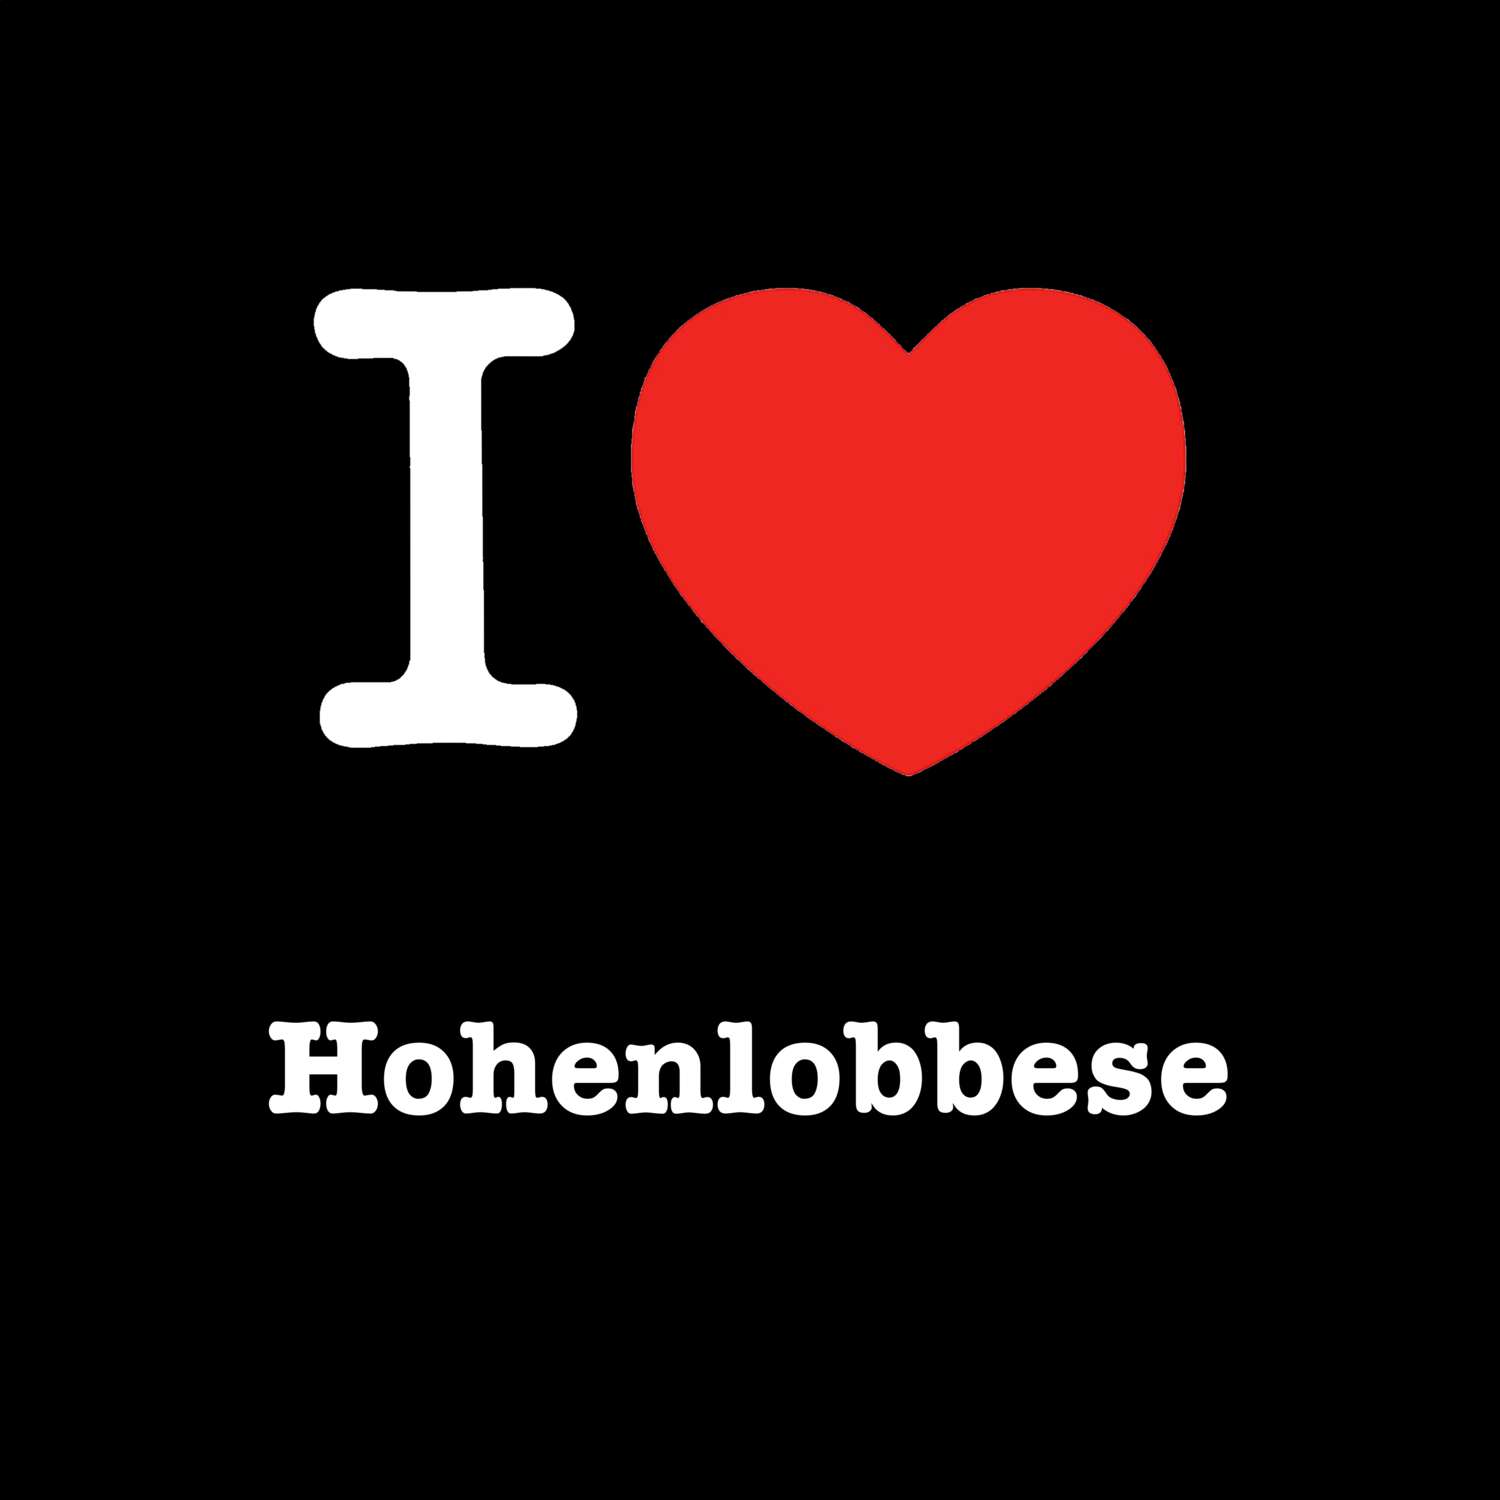 Hohenlobbese T-Shirt »I love«